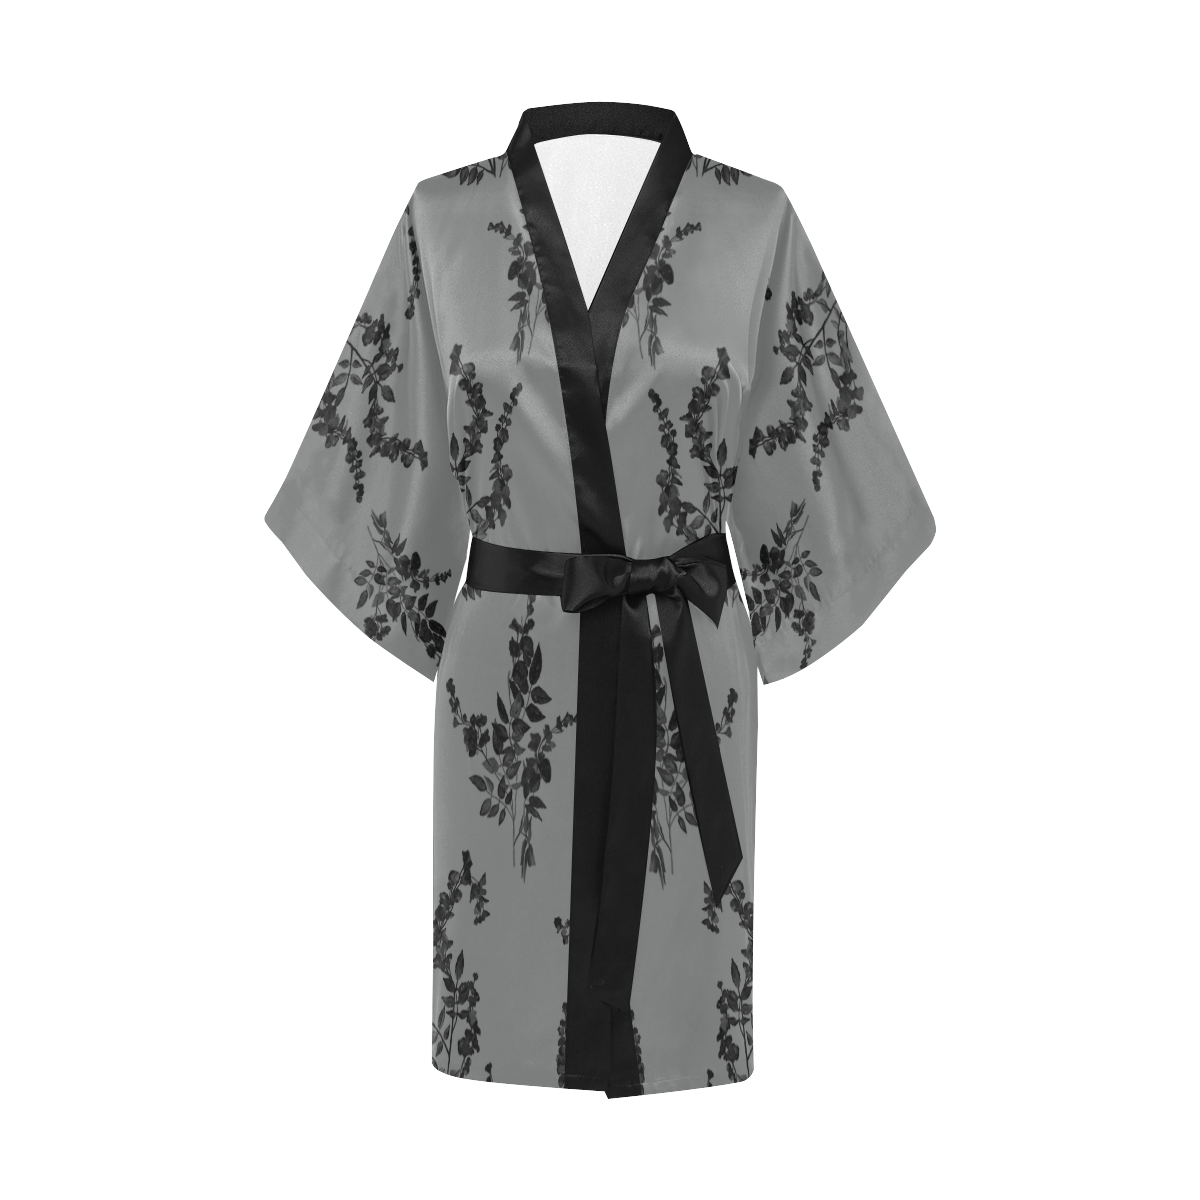 Tiny black flowers on light gray Kimono Robe